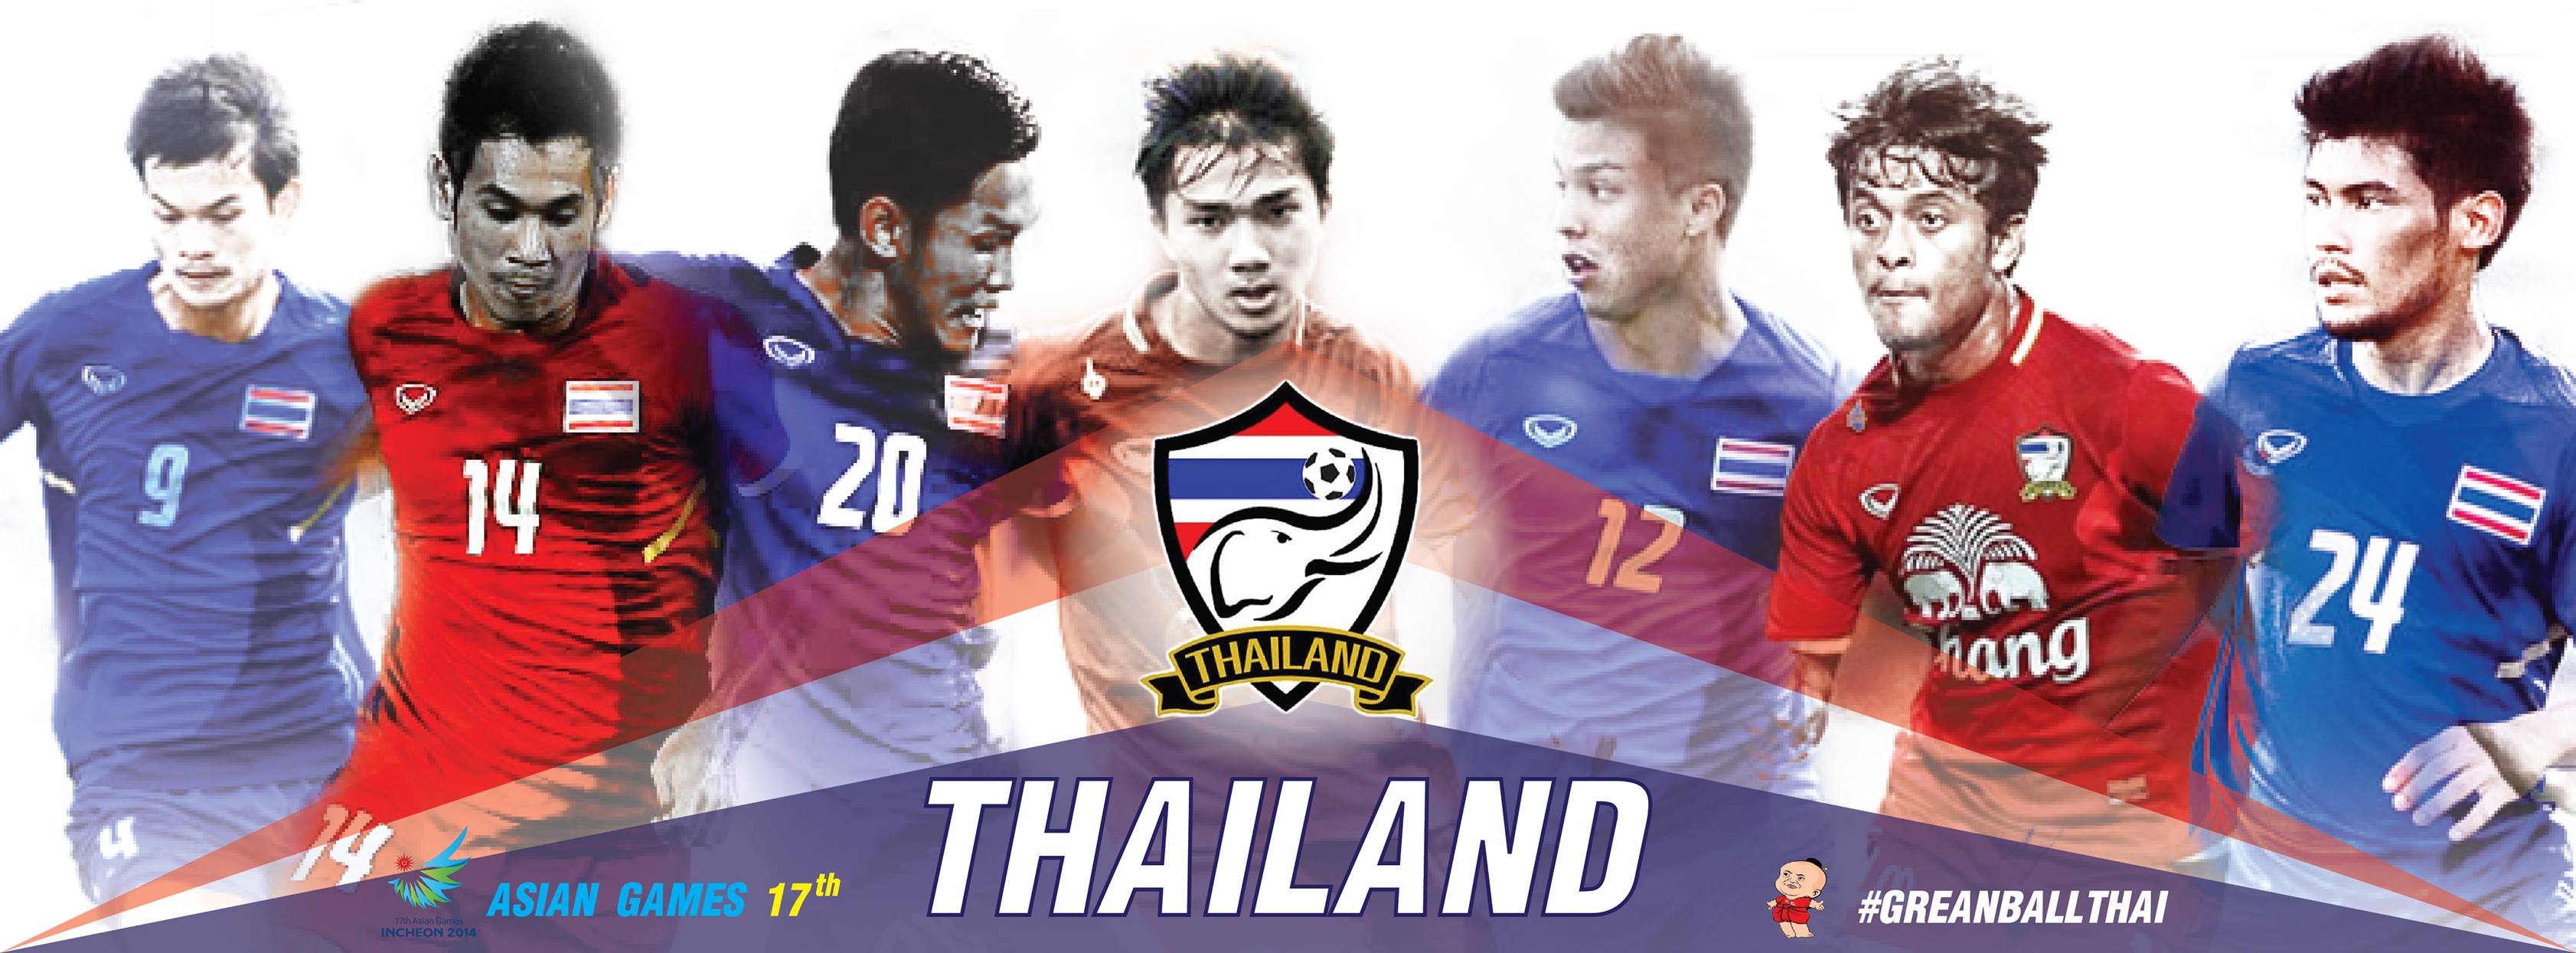 Thailand Football Team